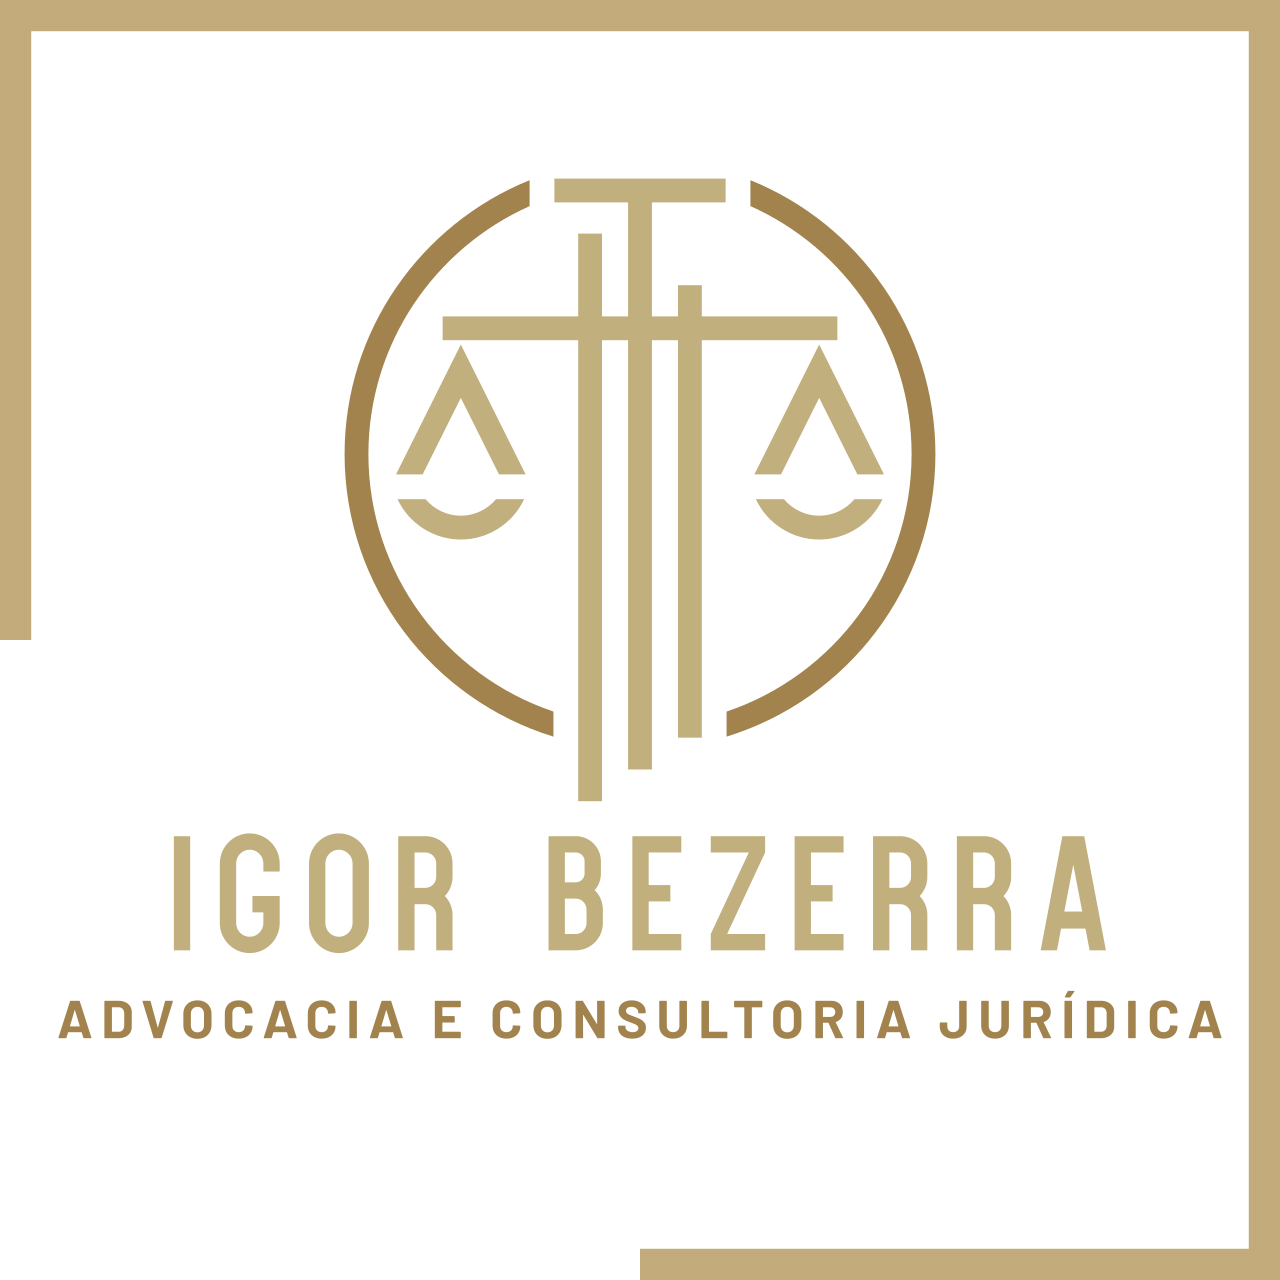 Igor Bezerra's web page